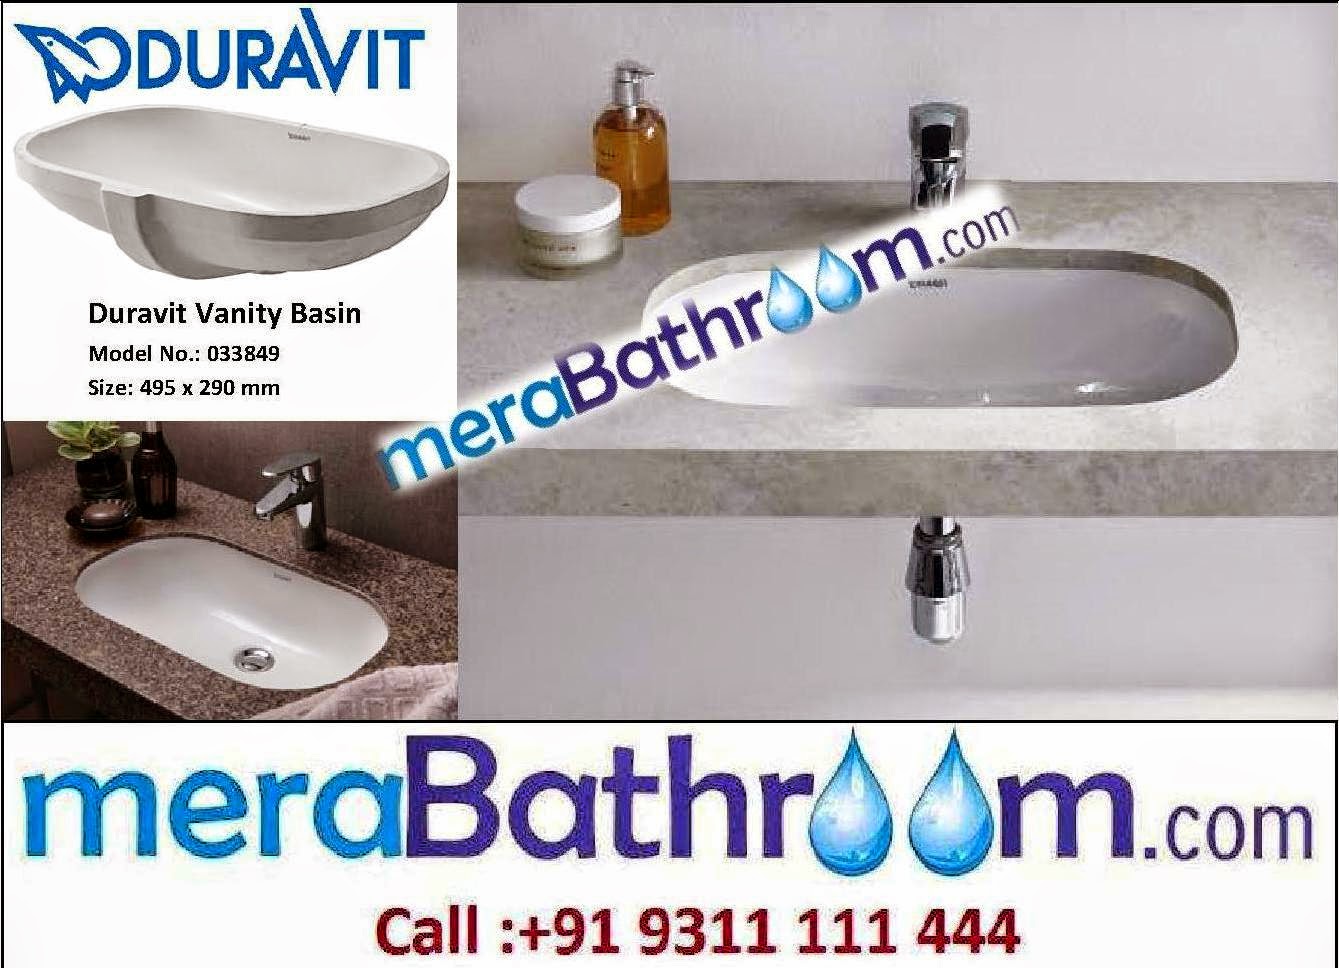  Duravit Vanity Basin